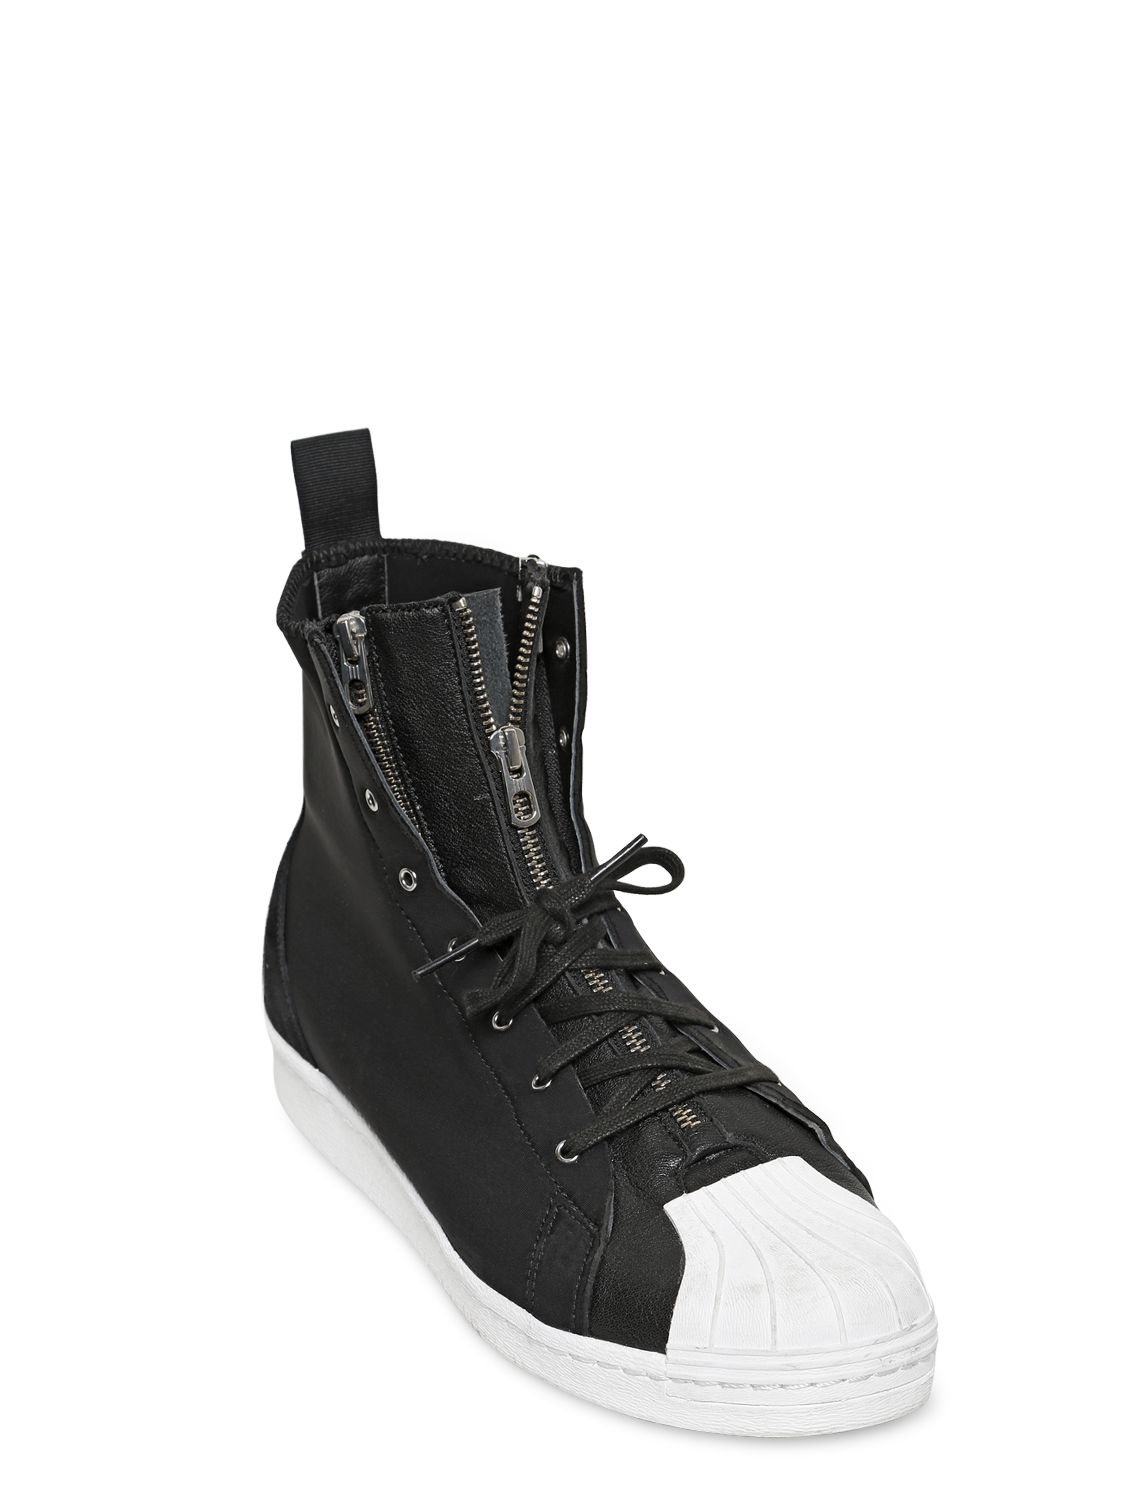 Lyst - Yohji Yamamoto Zipper Star Neoprene High Top Sneakers in Black ...